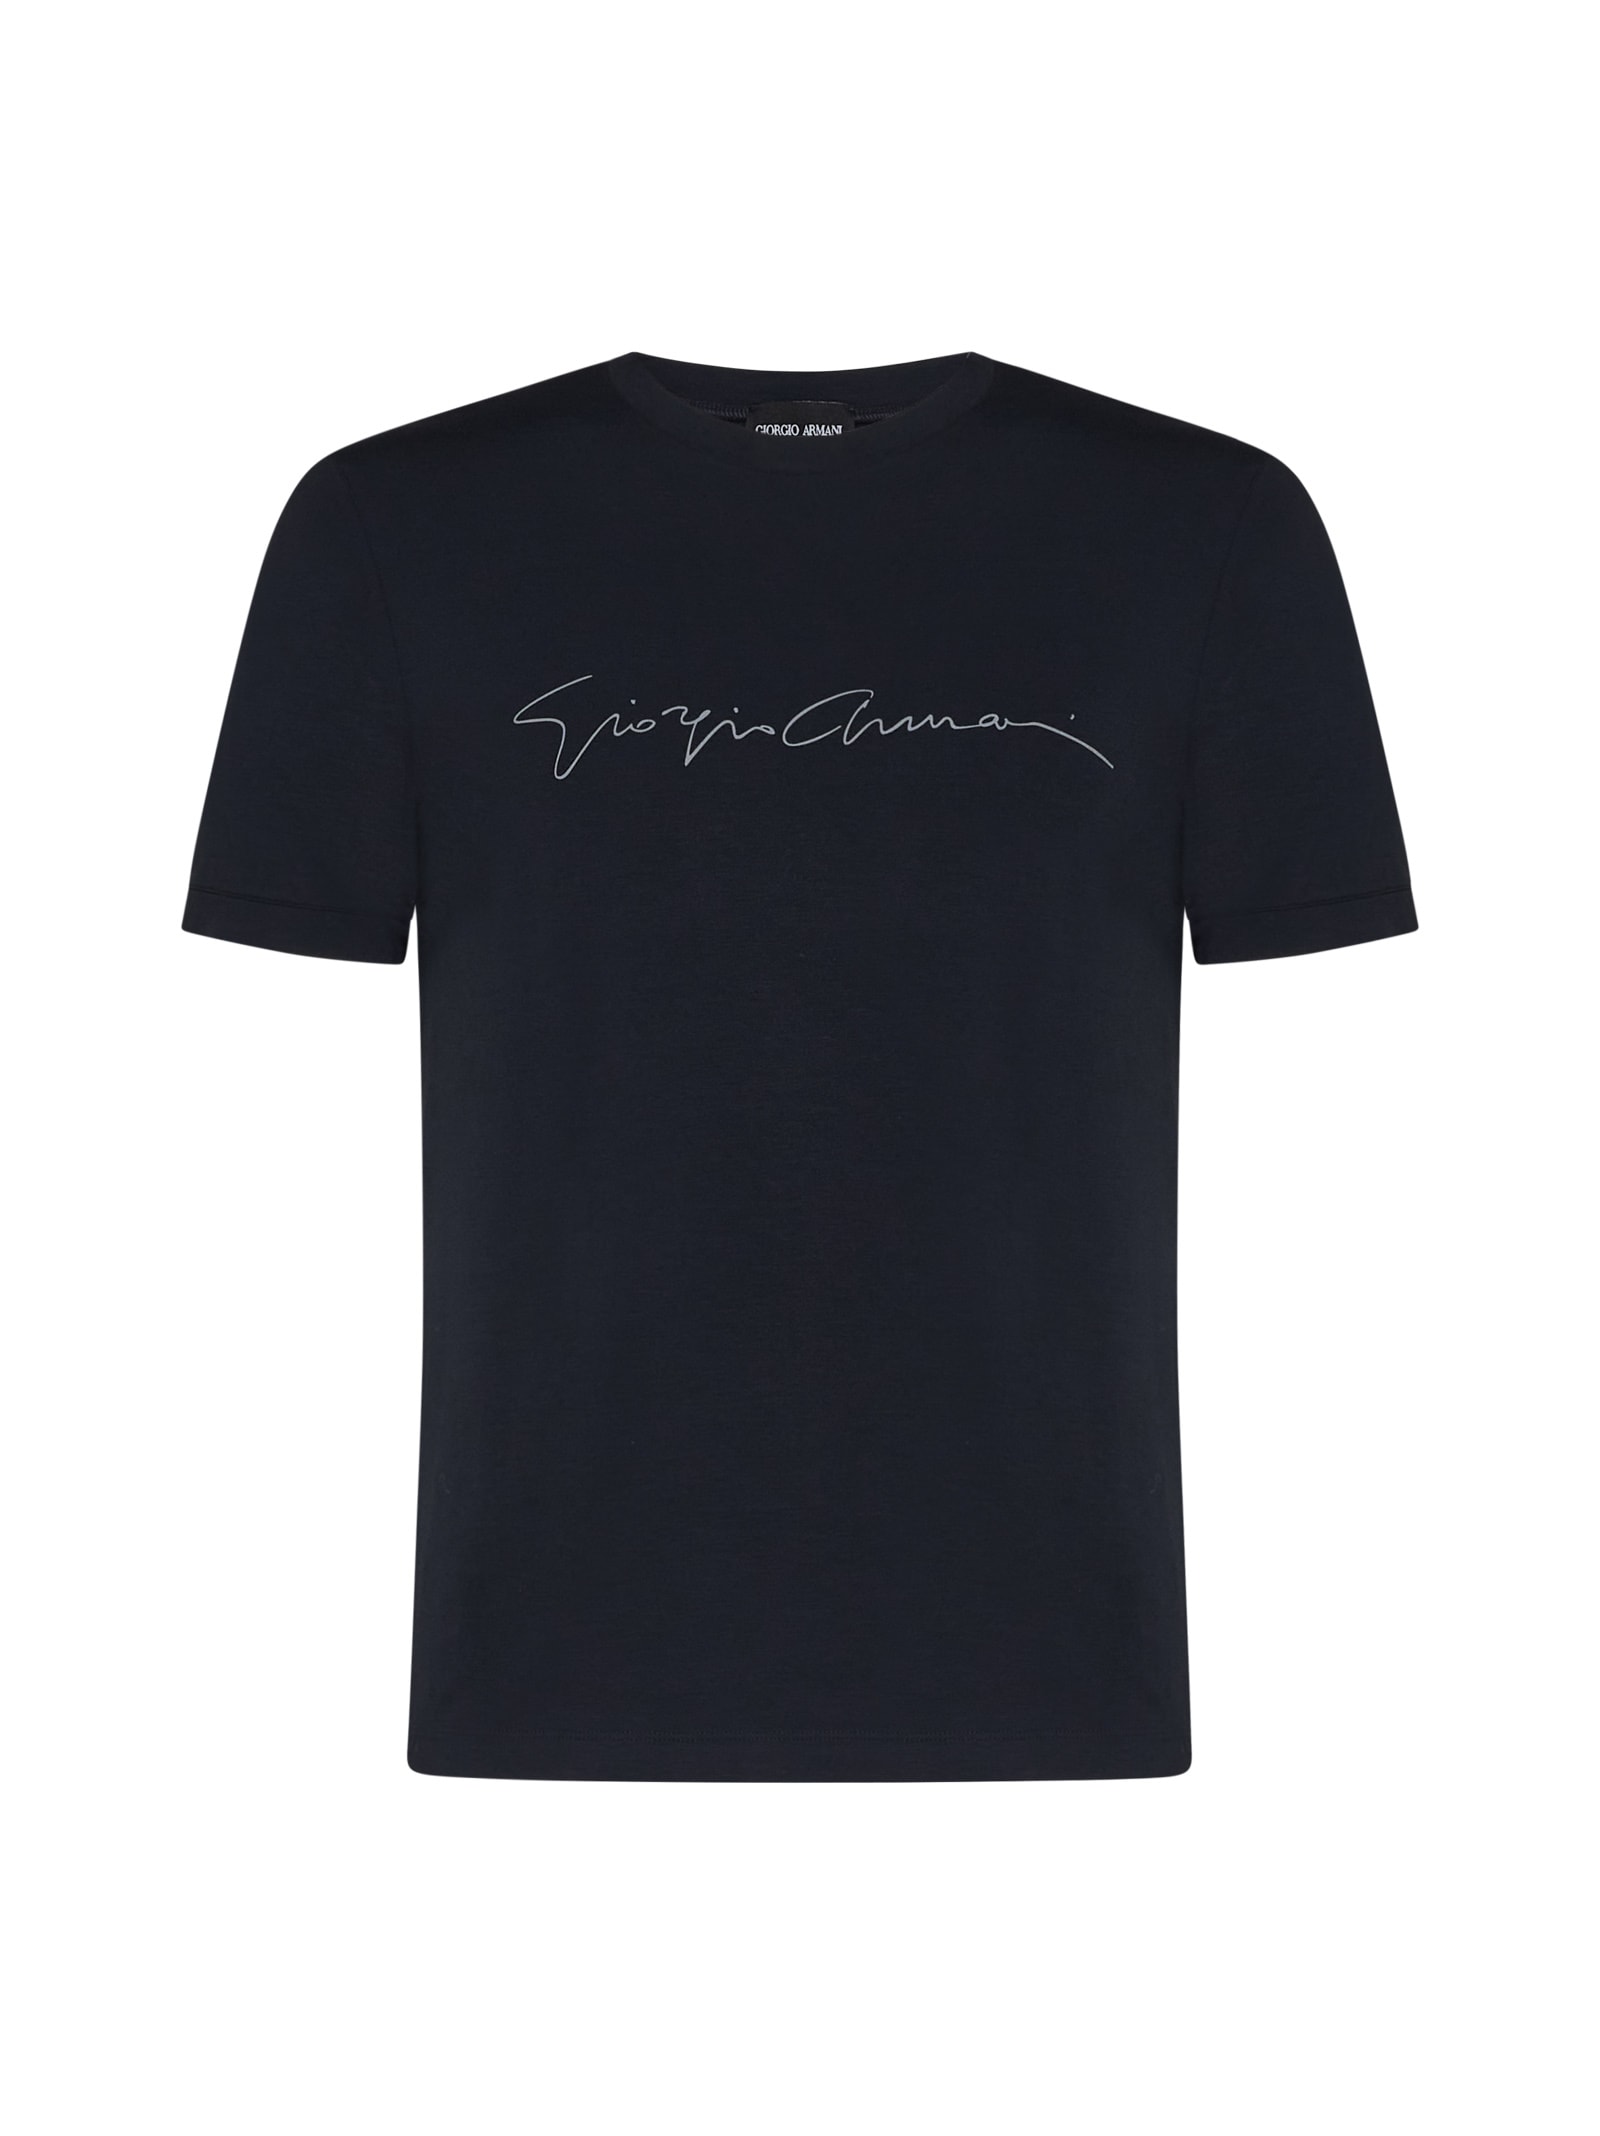 Giorgio Armani T-shirt In Blu Navy